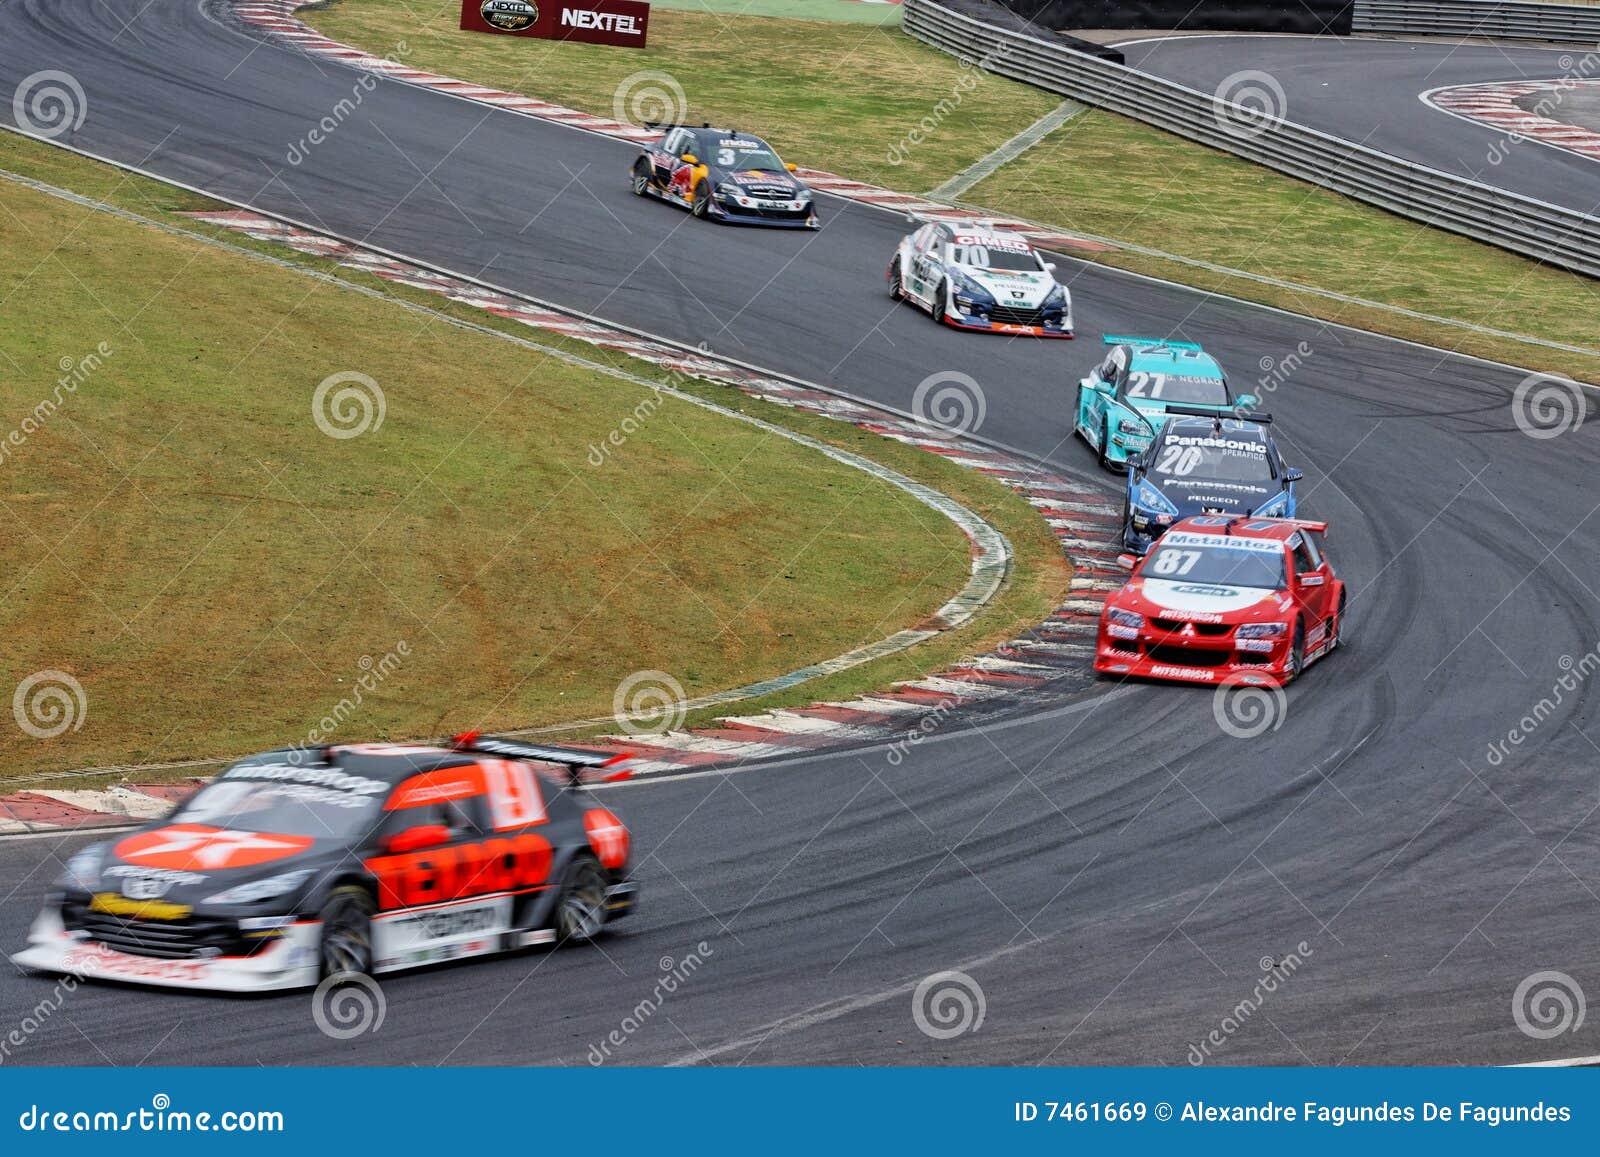 Stock Car Race Interlagos Sao Paulo Brazil Editorial Image - Image of prix, wheels: 7461669